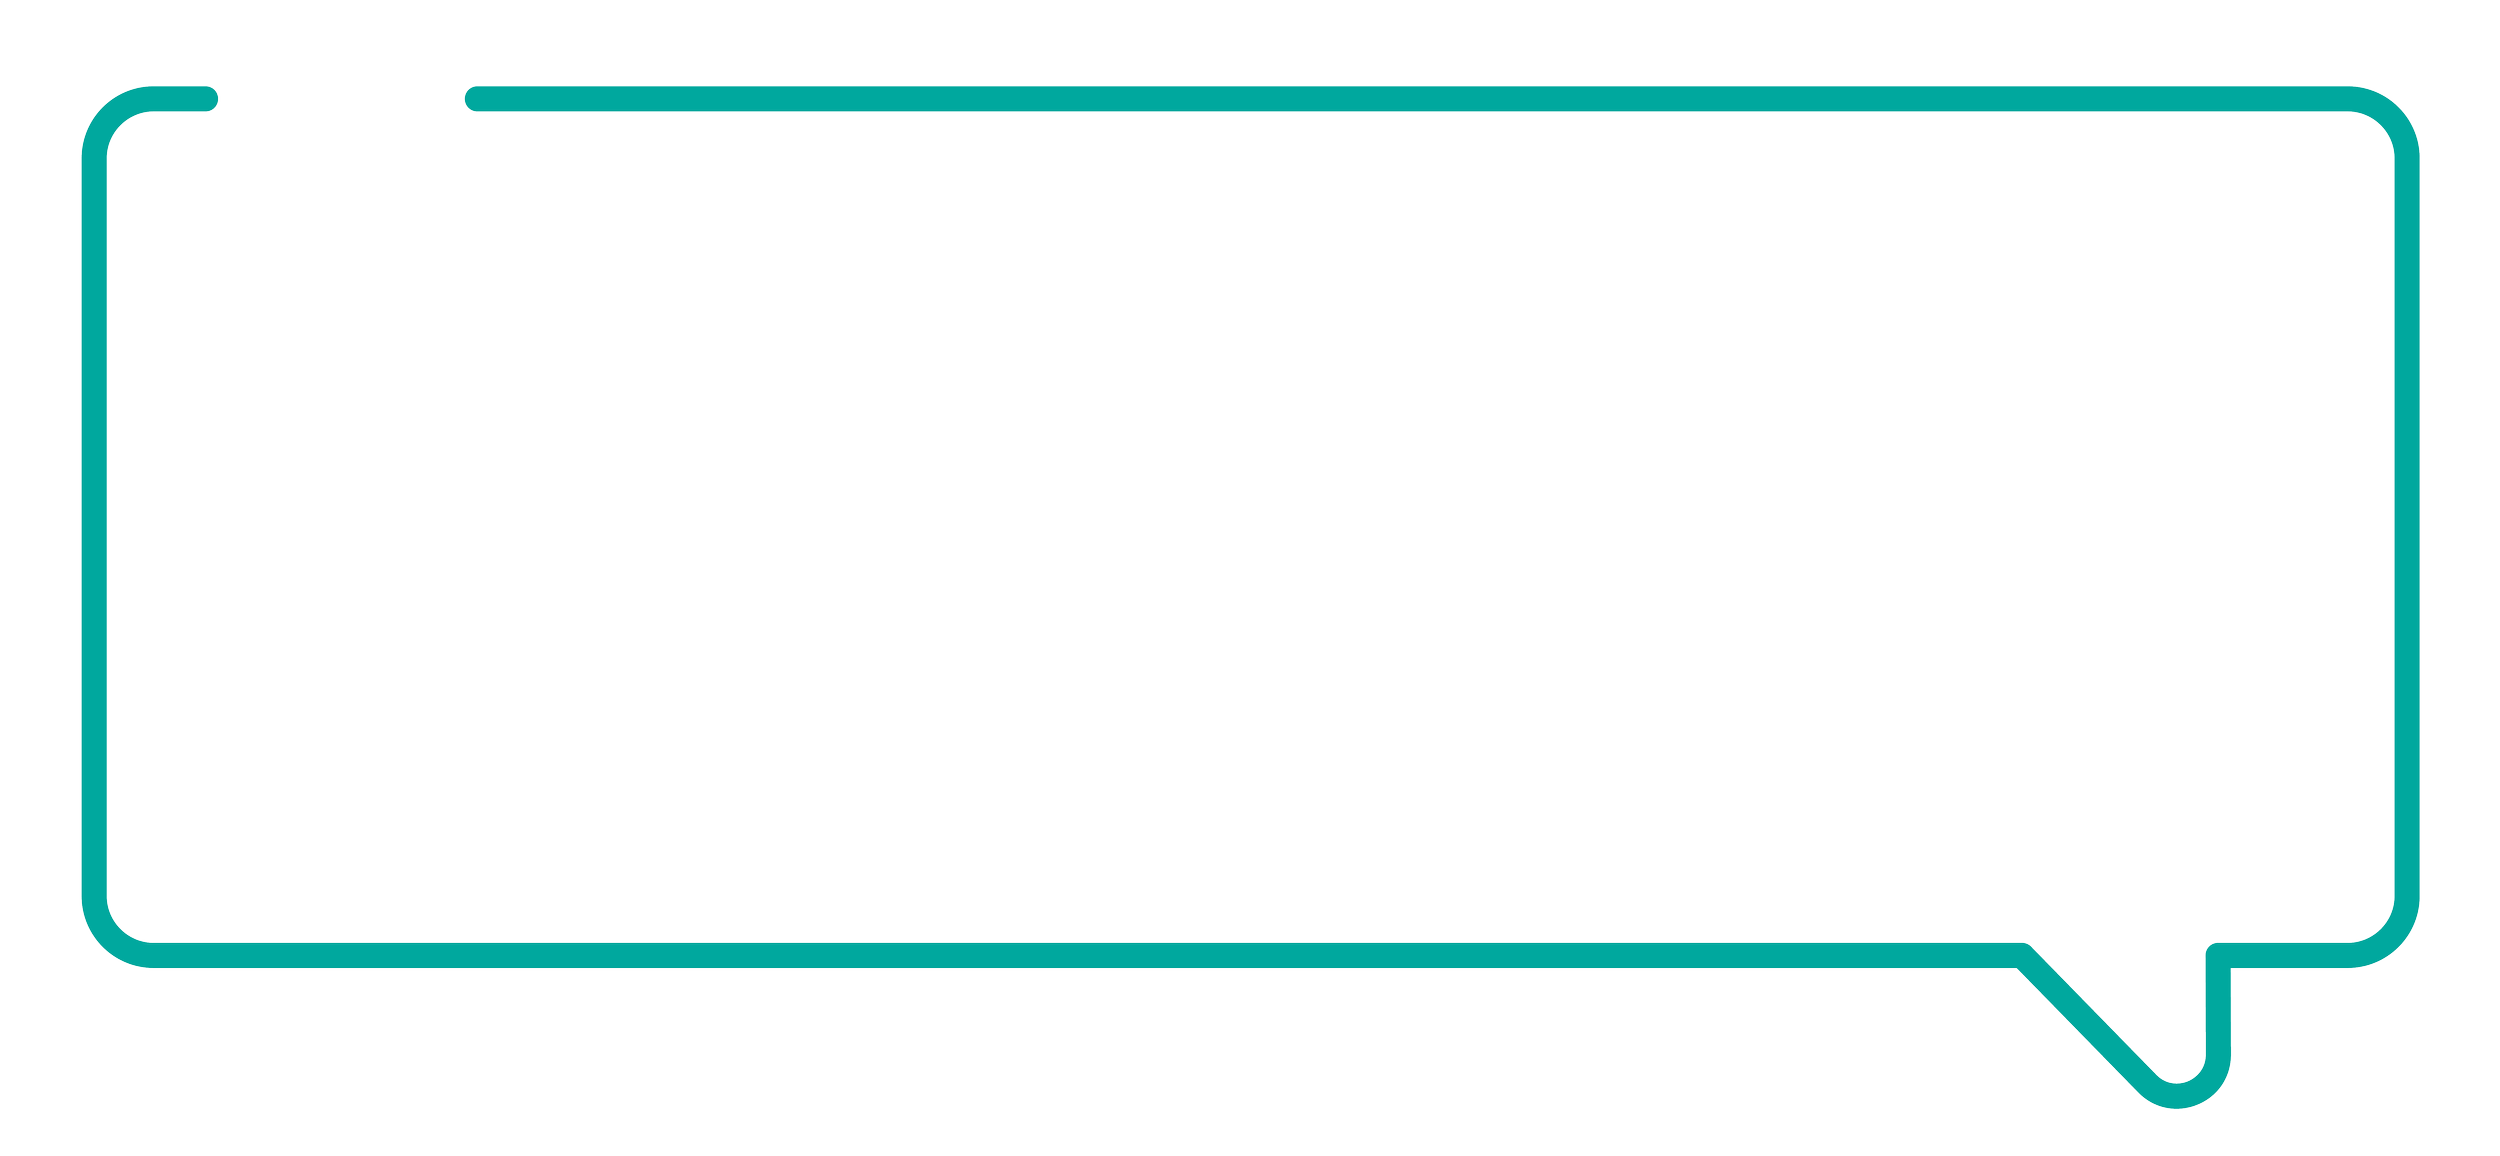 Empathy Training